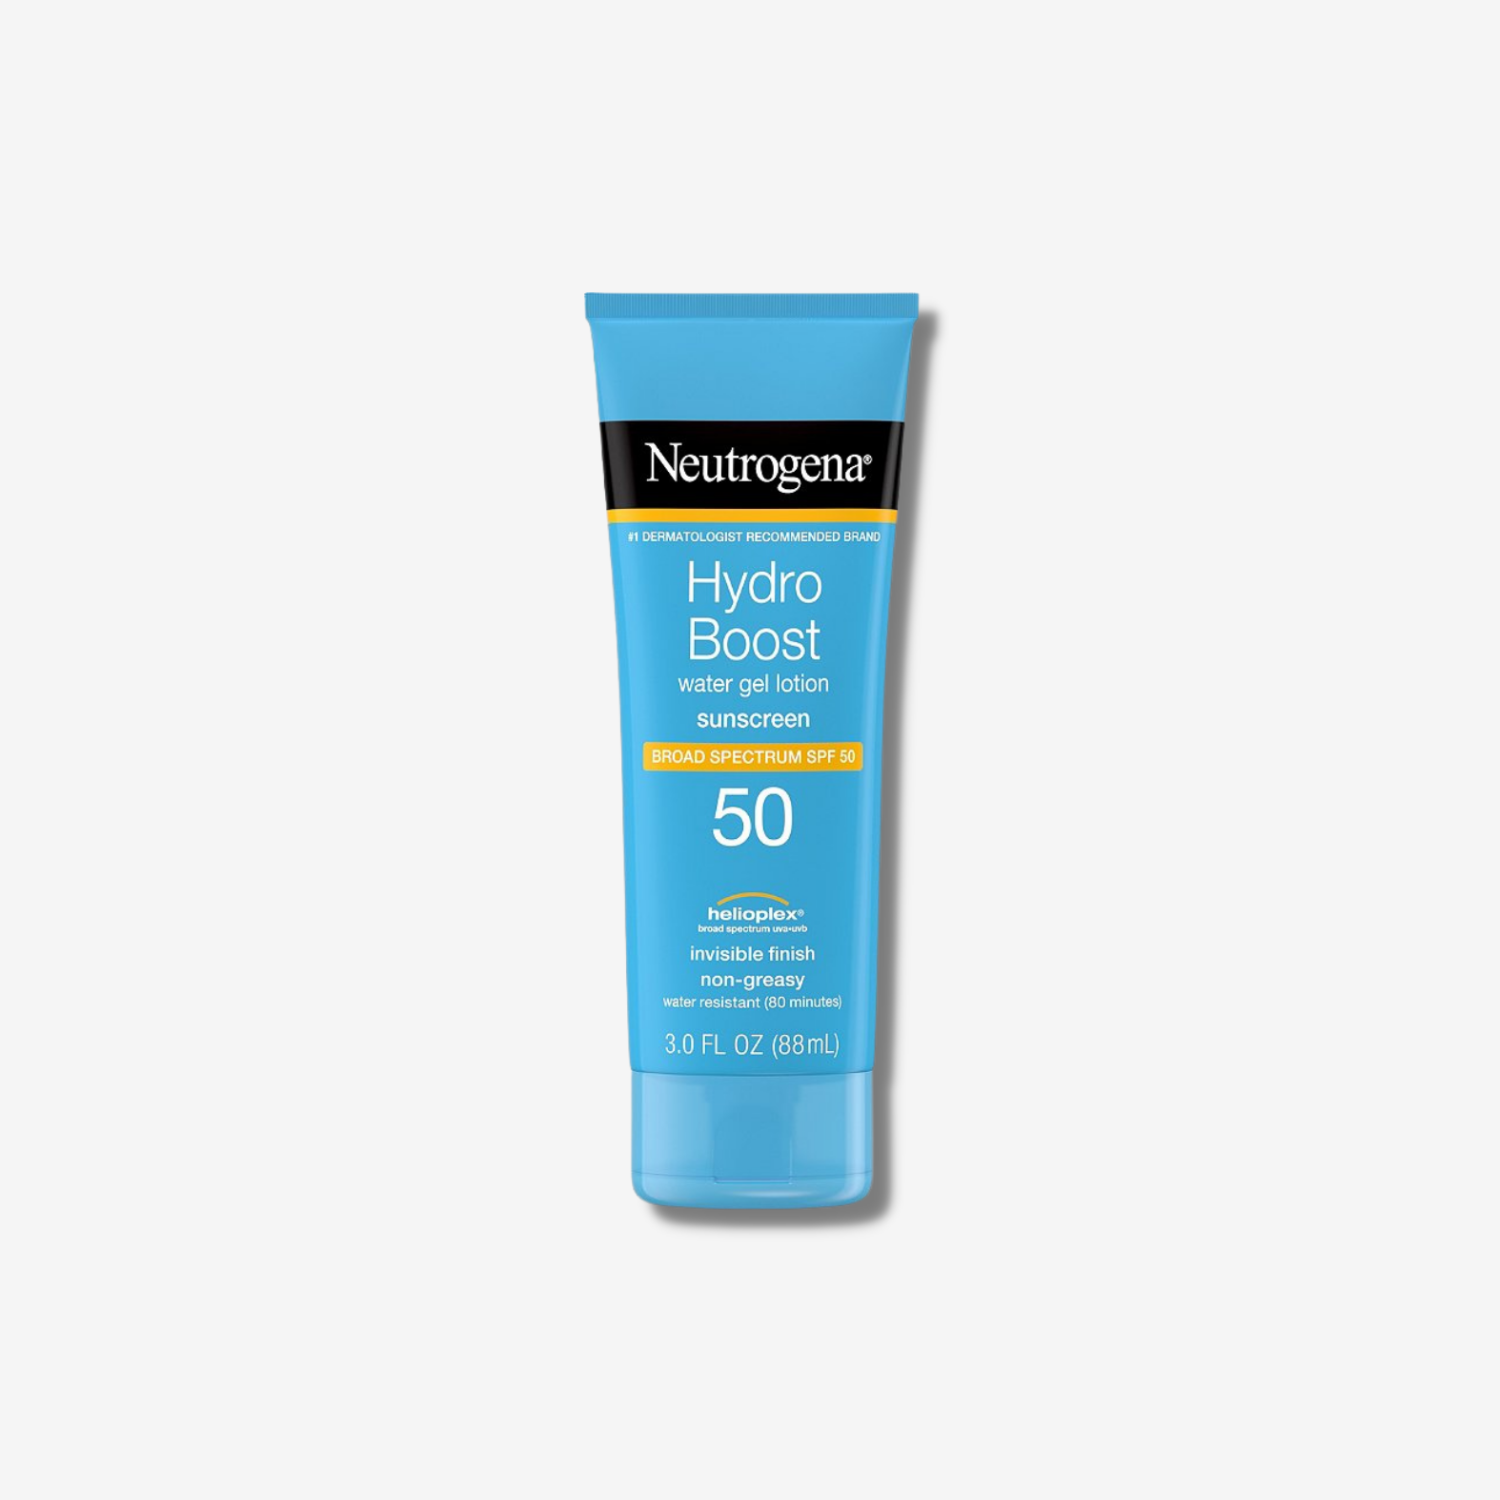 Neutrogena Hydro Boost Sunscreen SPF 50